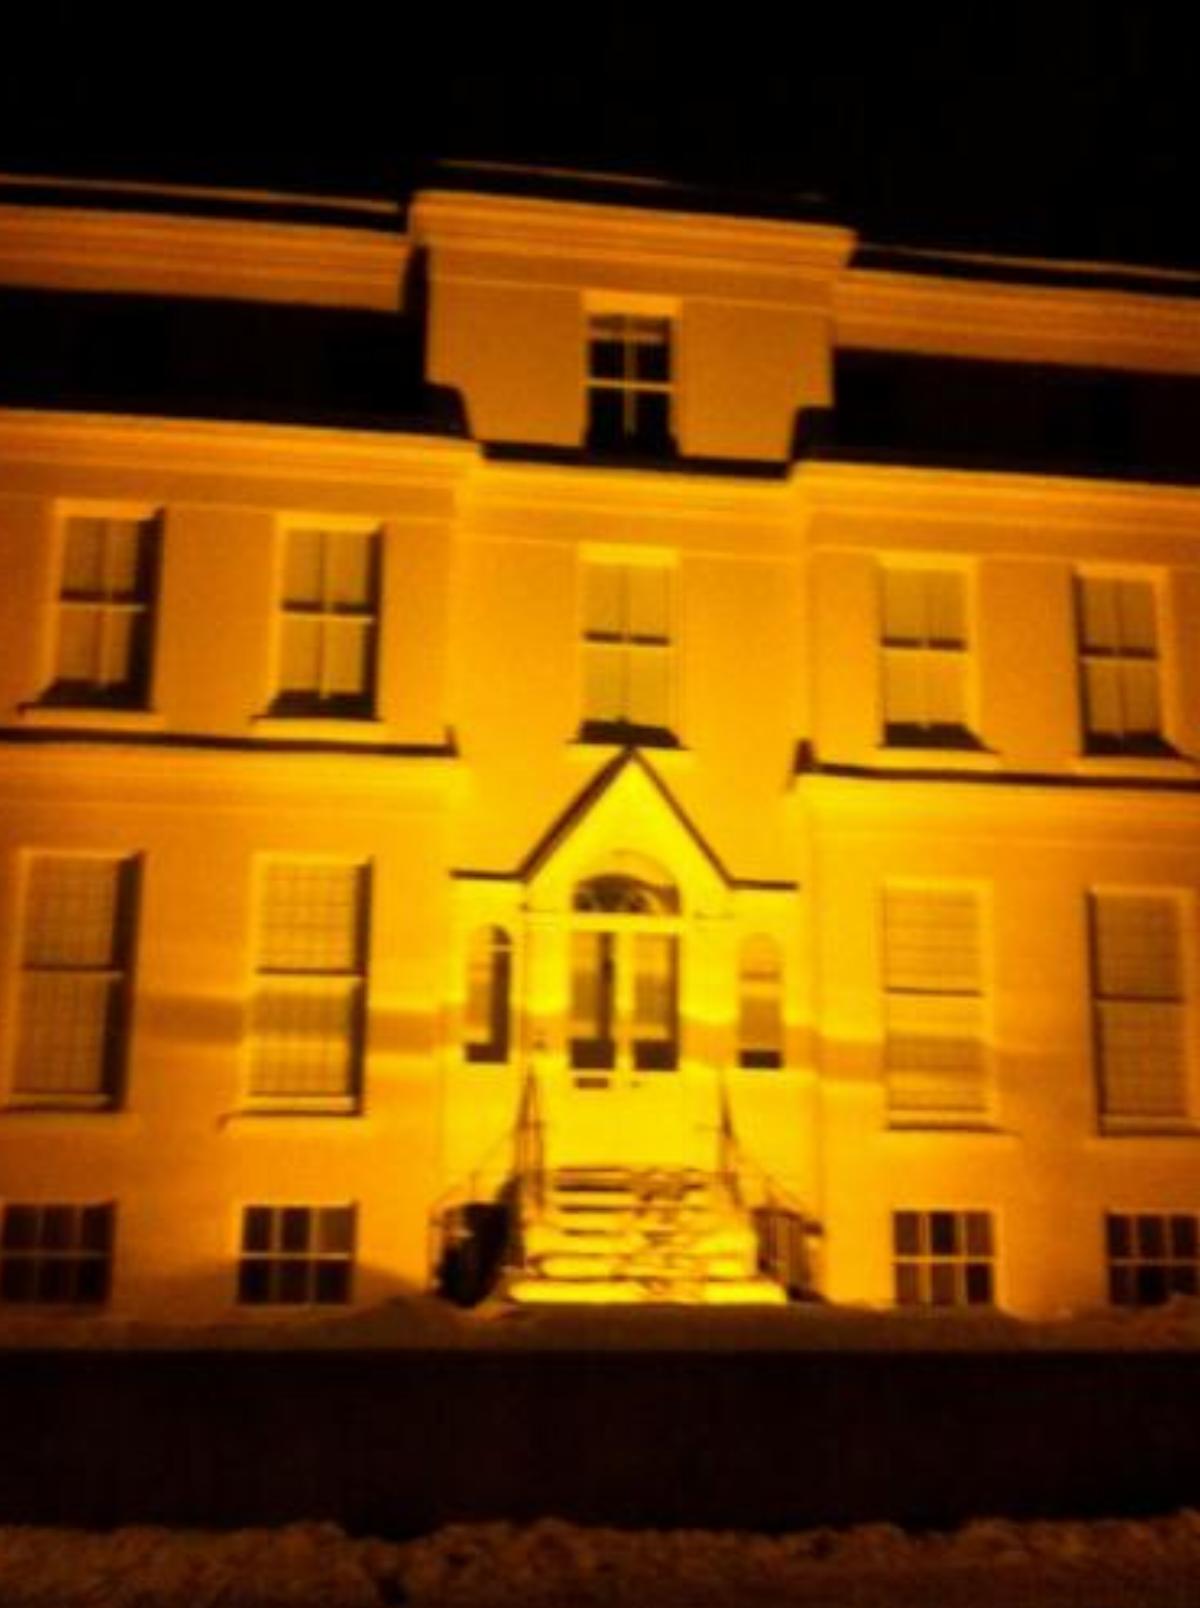 Manor House, Felpham Serviced Apartments Hotel Bognor Regis United Kingdom